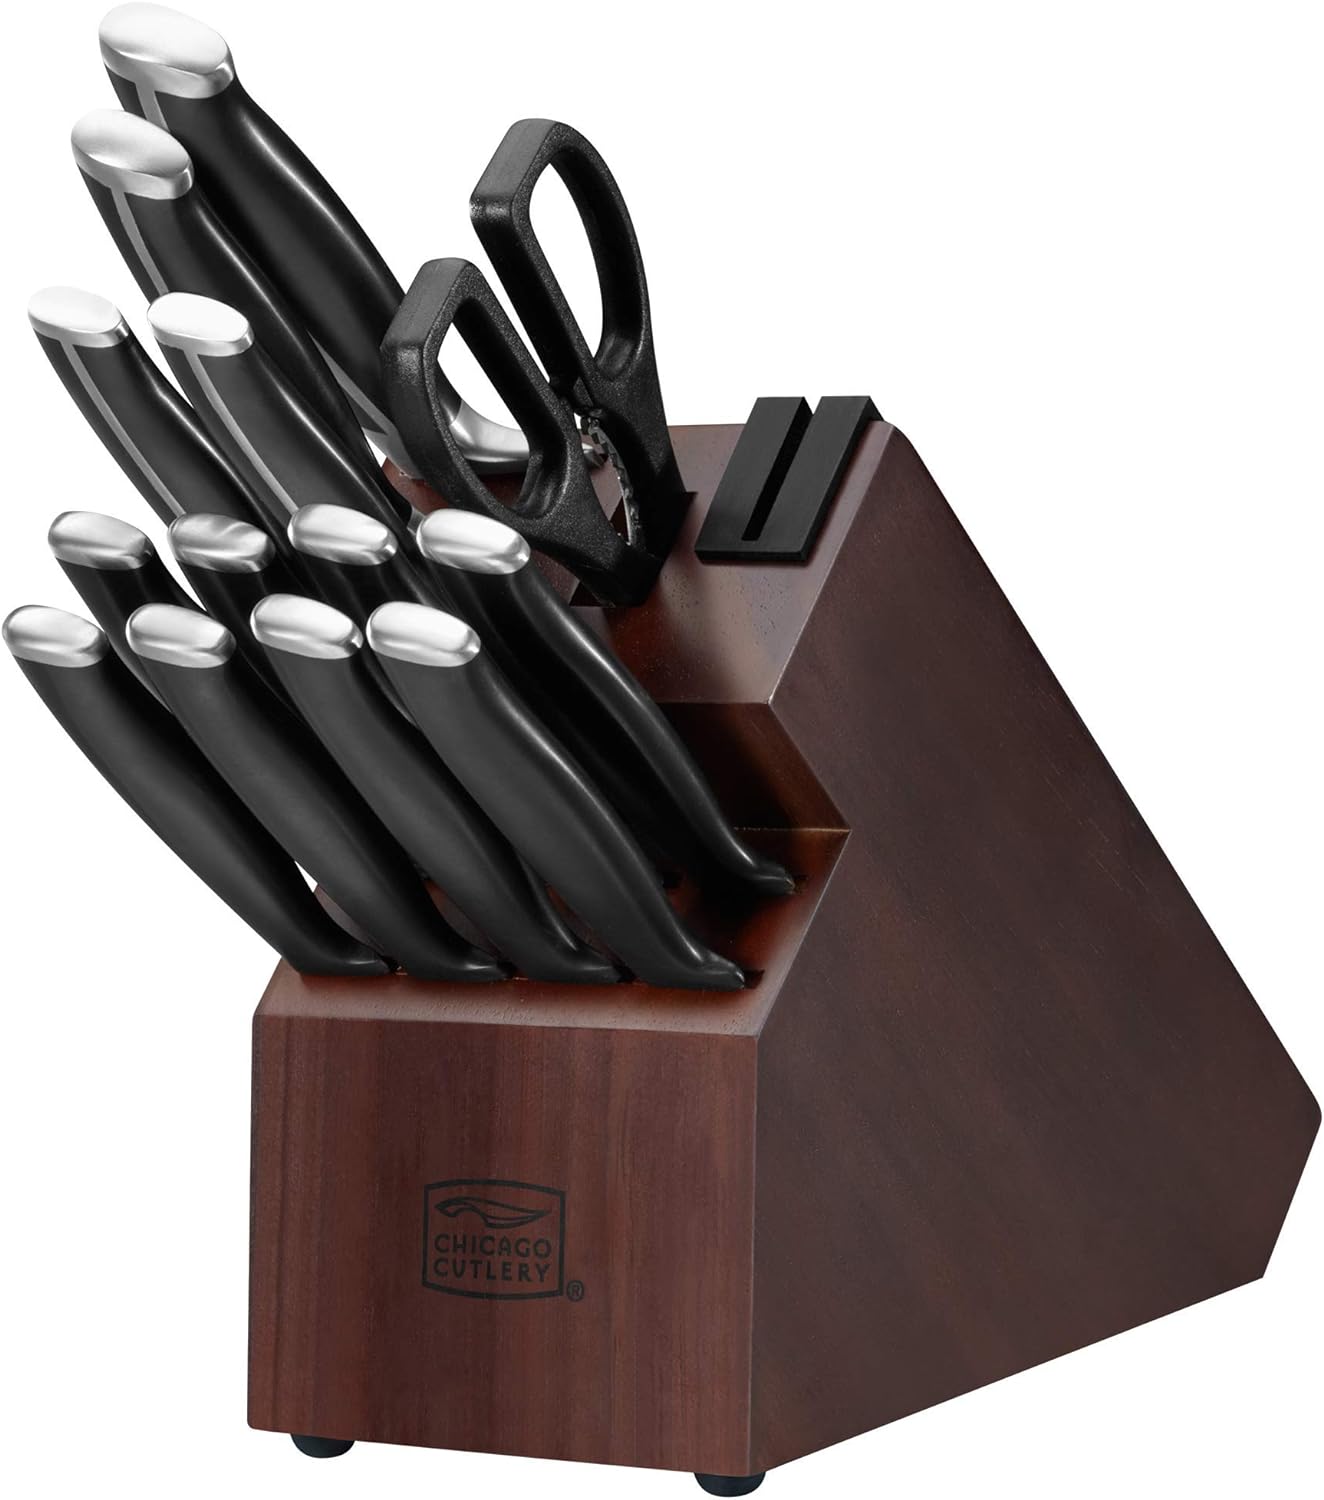 Chicago Cutlery® Burling 14-piece Block Set Review